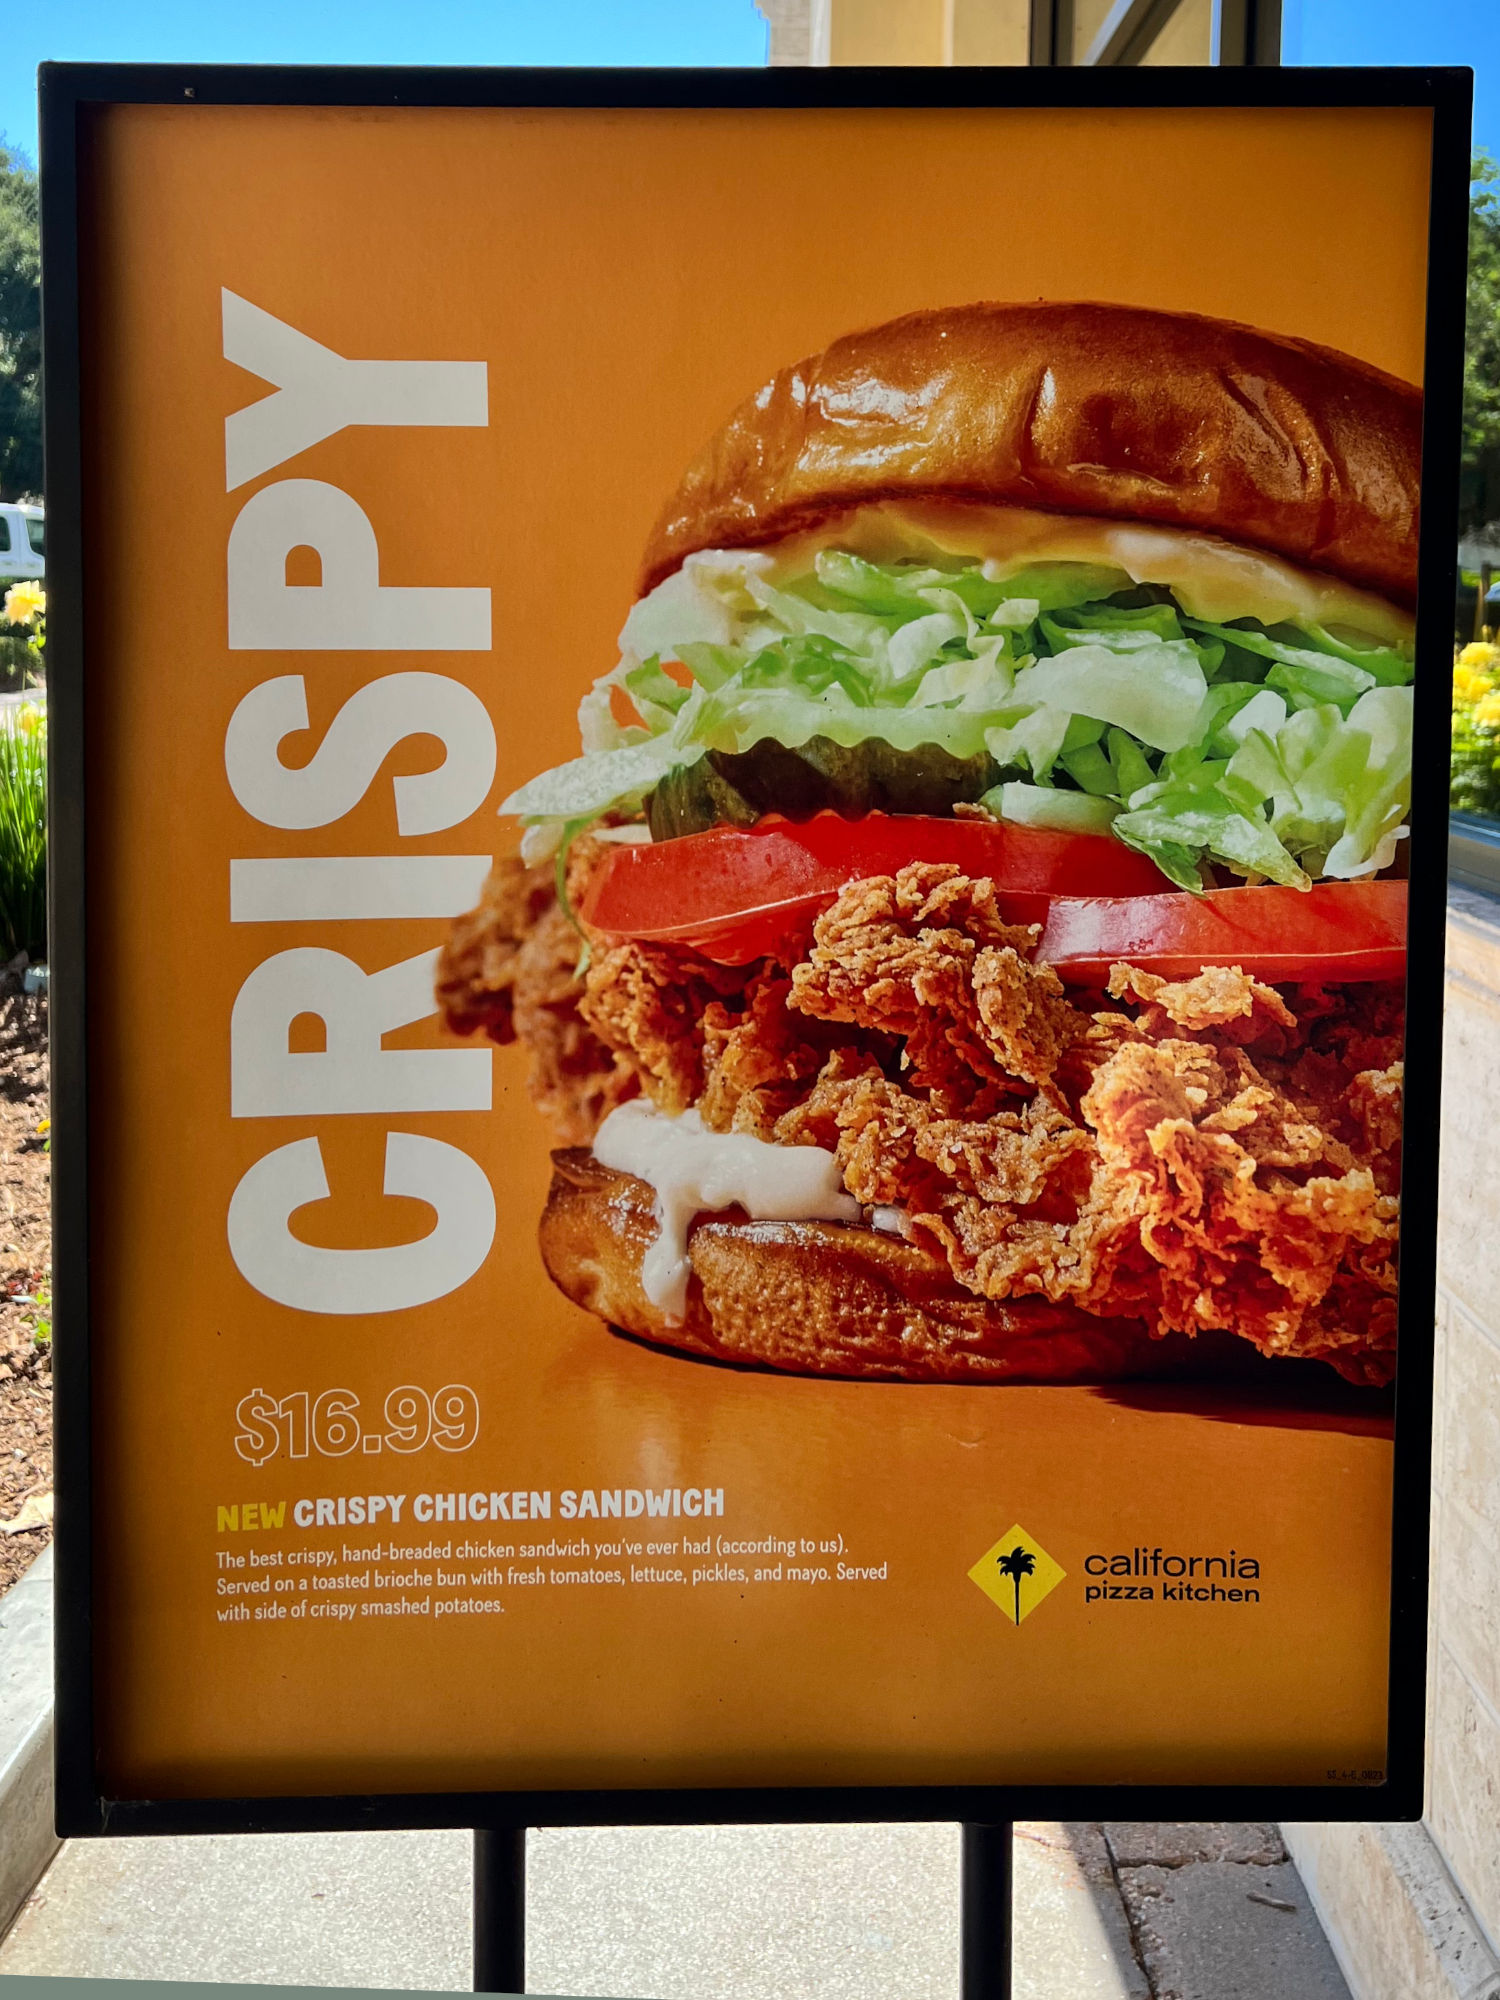 CPK Crispy Chicken Sandwich